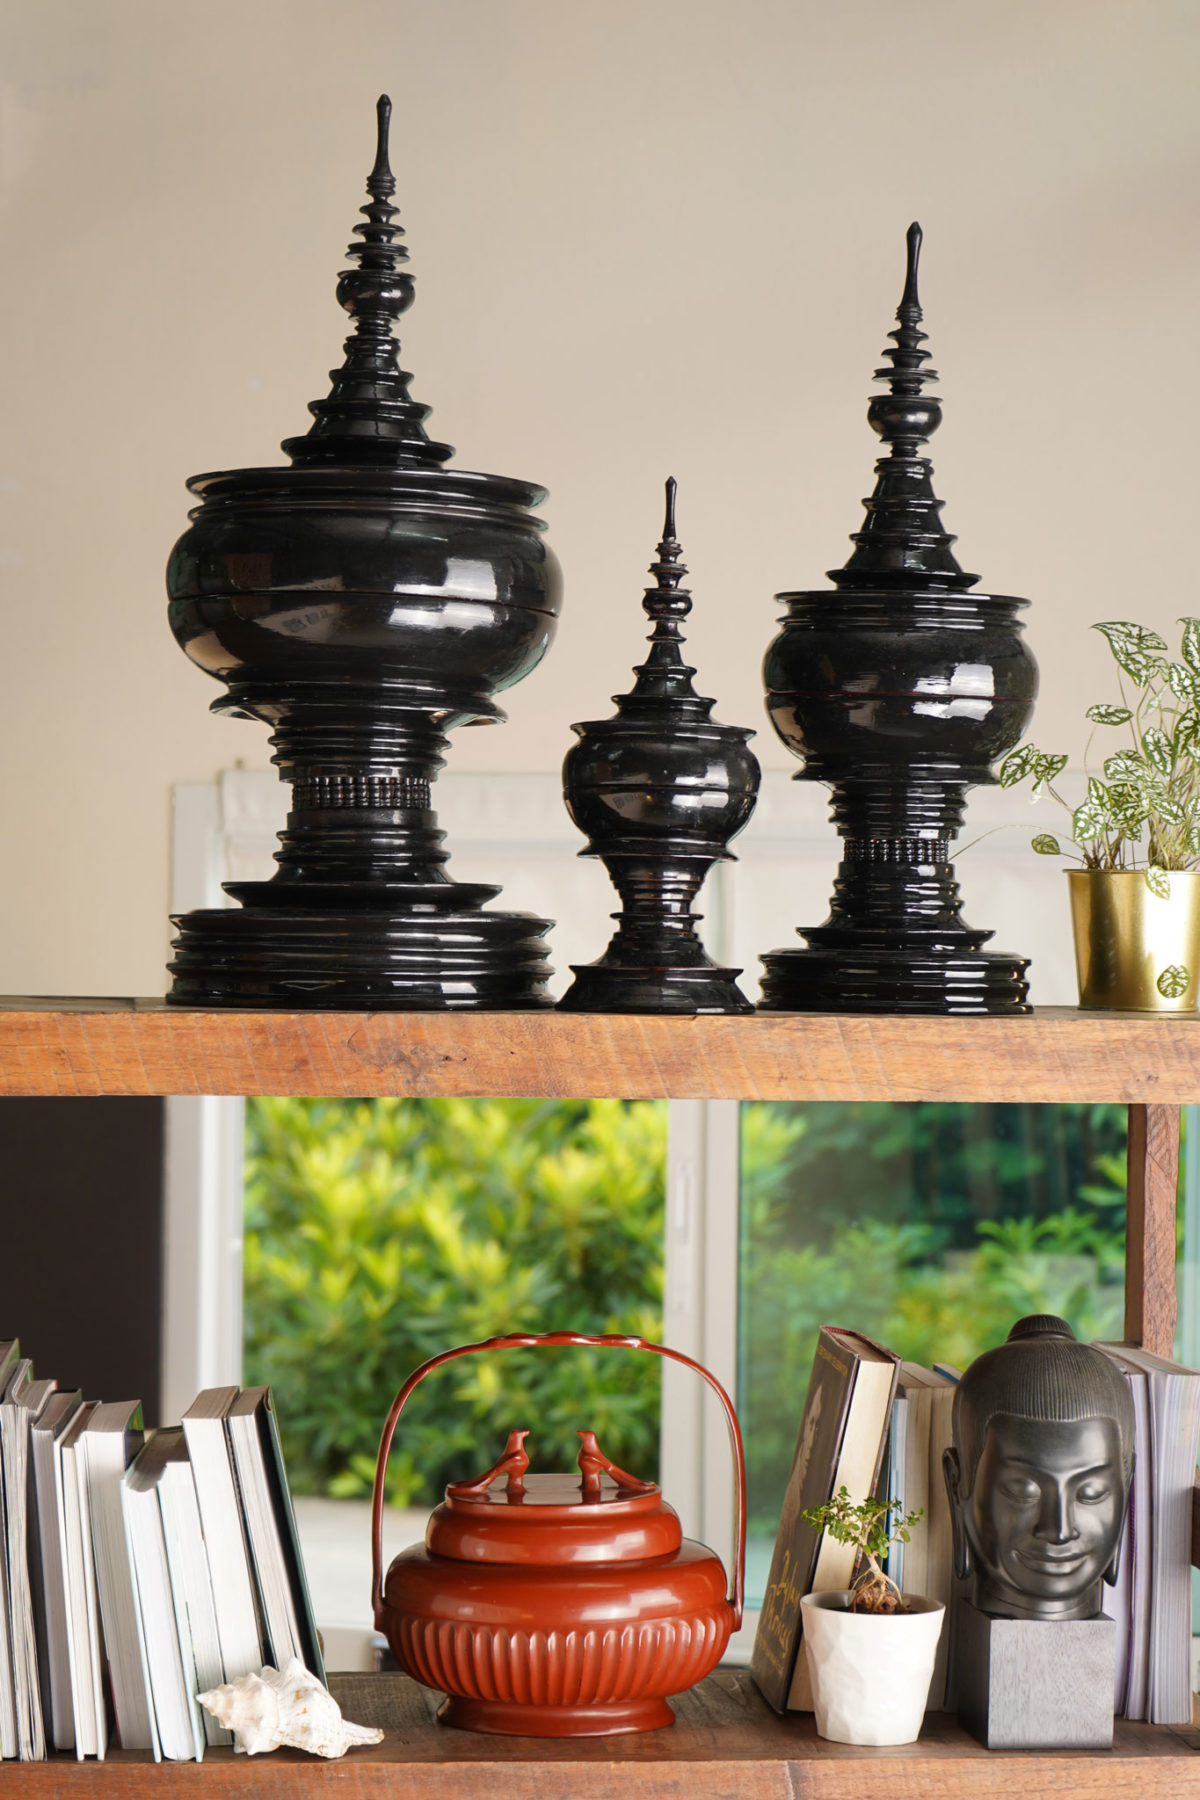 Burmese stupa lacquered food offering vessel-set of black color-1